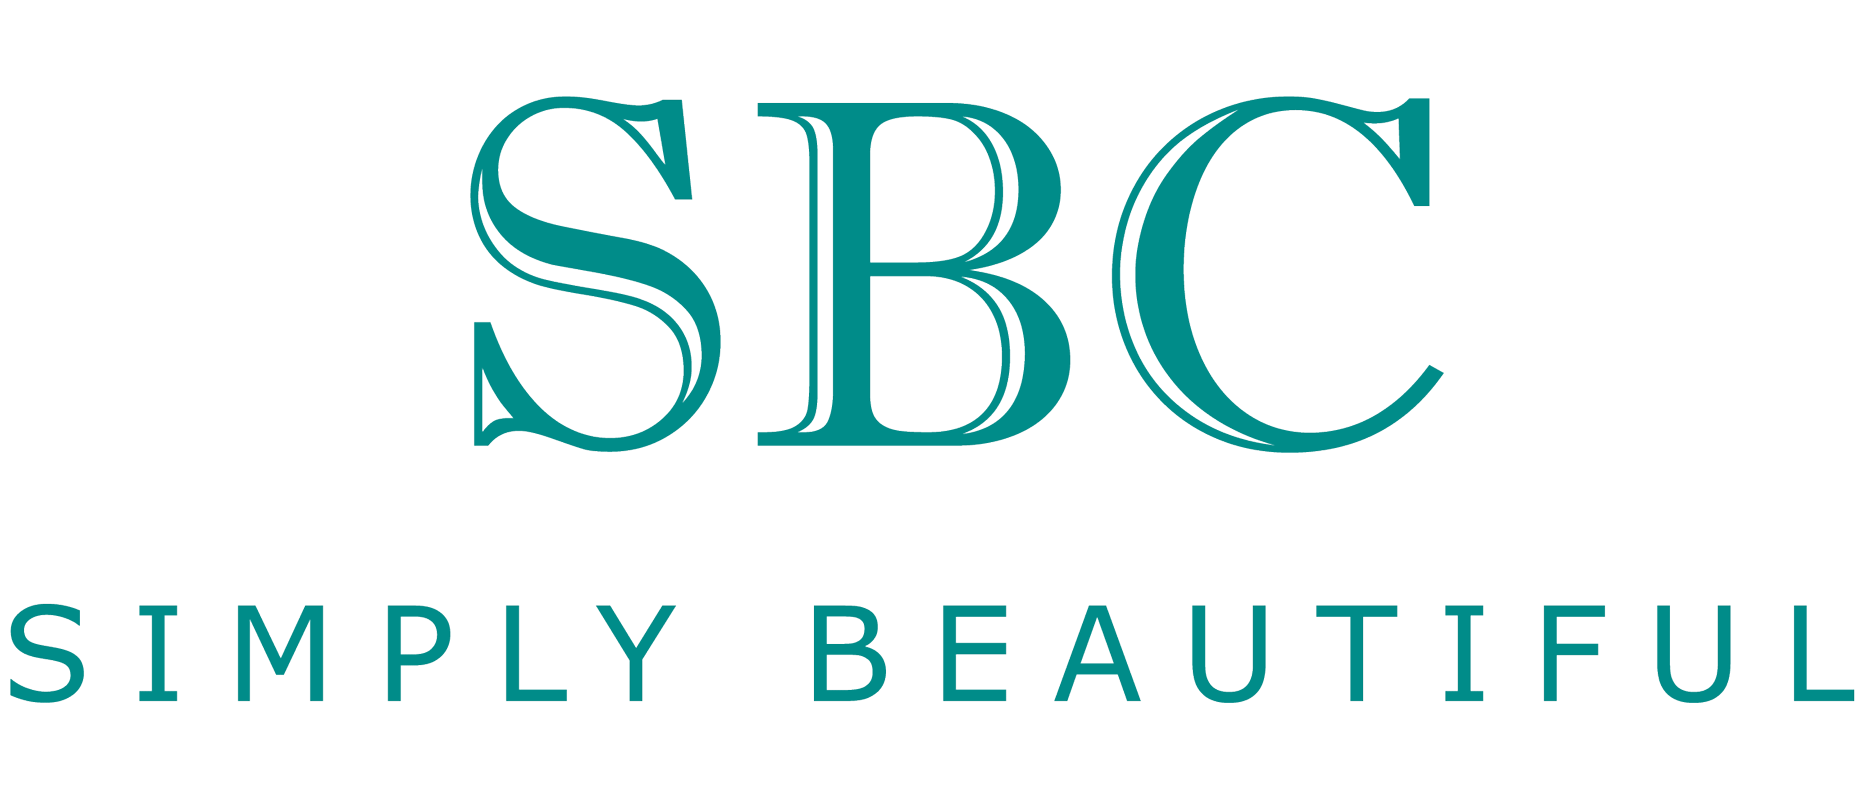 Simply косметика лого. Decus логотип. Simply pretty лого. ООО SBC логотип. Simple is beautiful